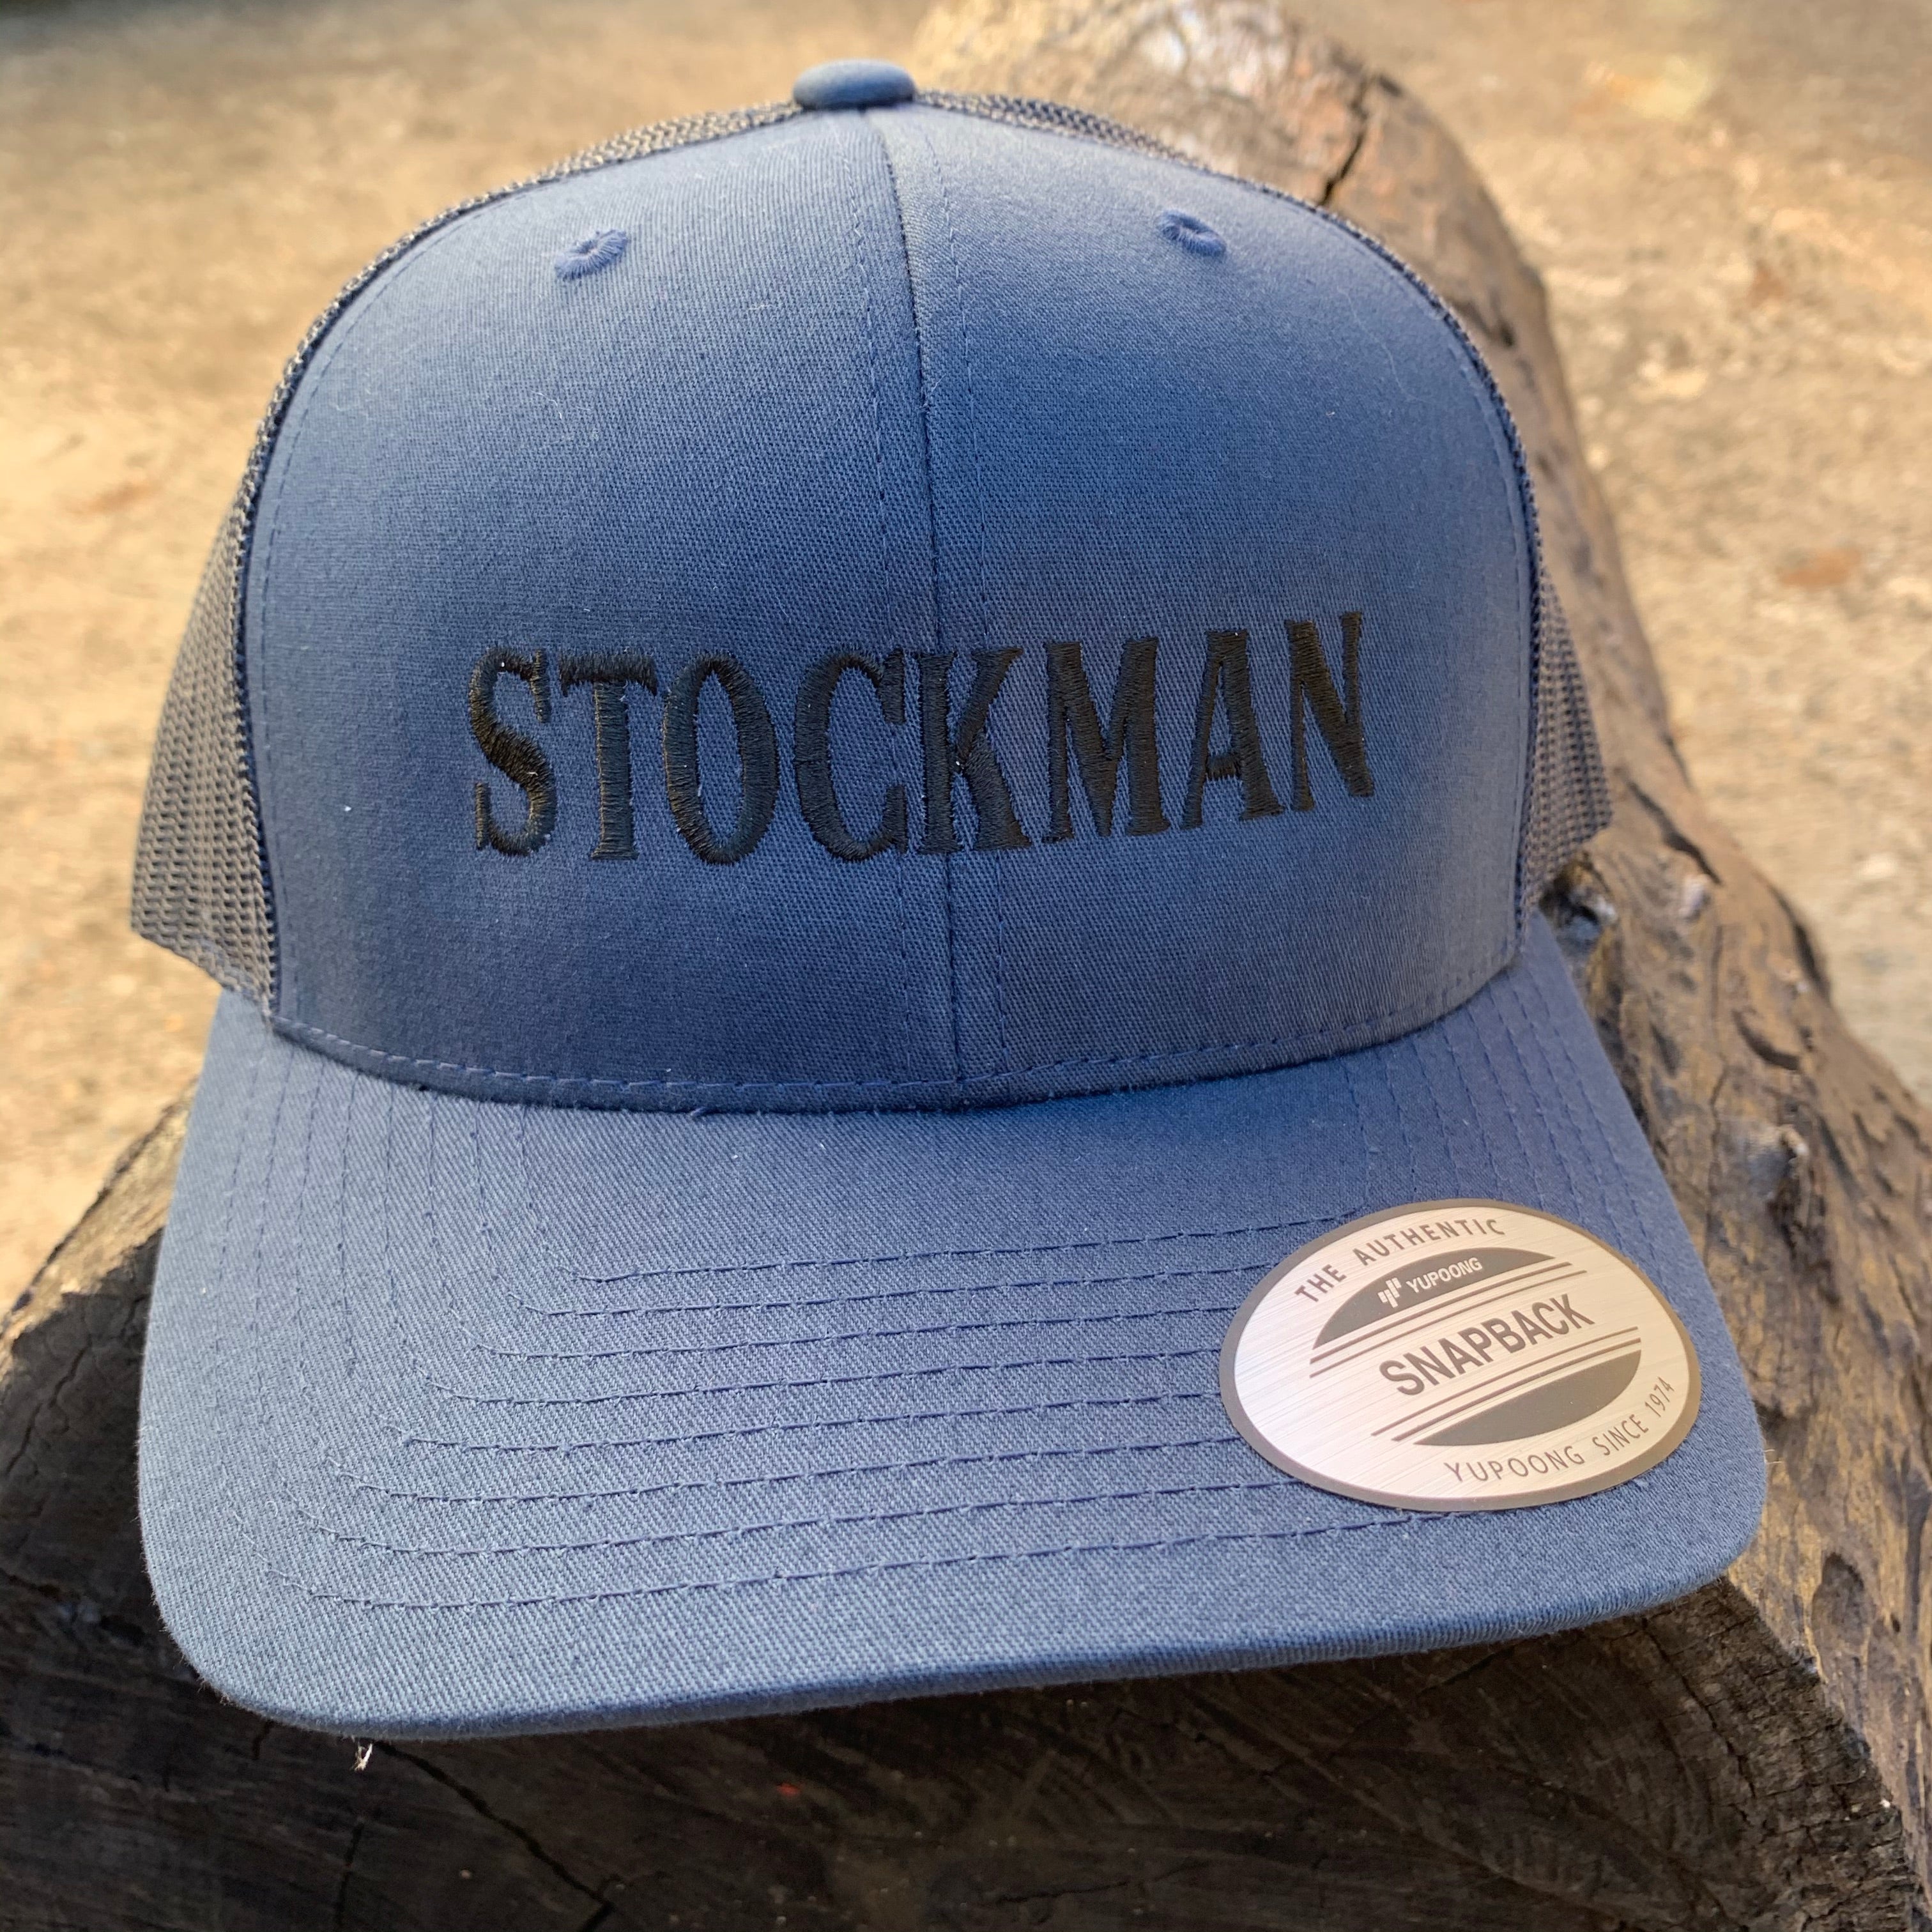 Stockman Trucker - STOCKMAN N CO